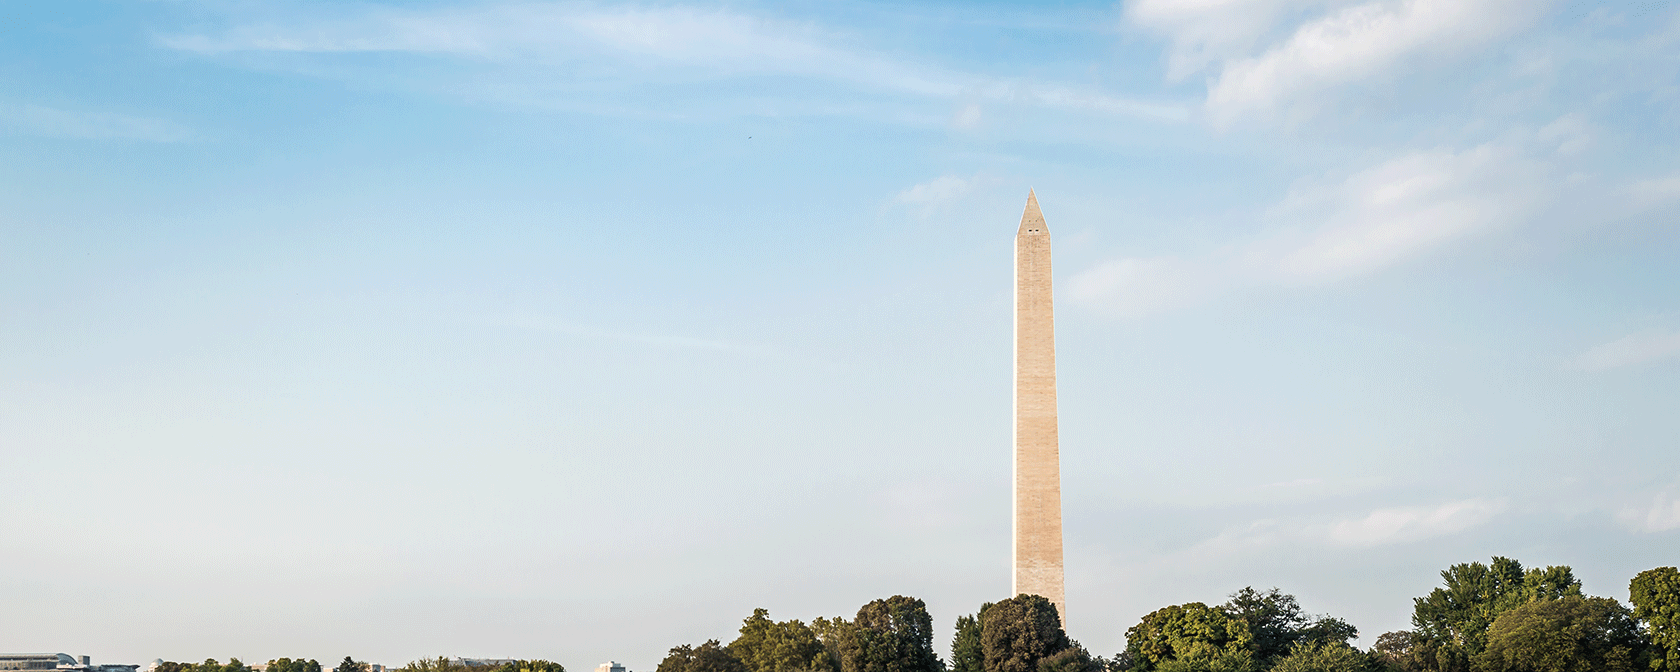 Washington Monument as seen from Tidal Basin